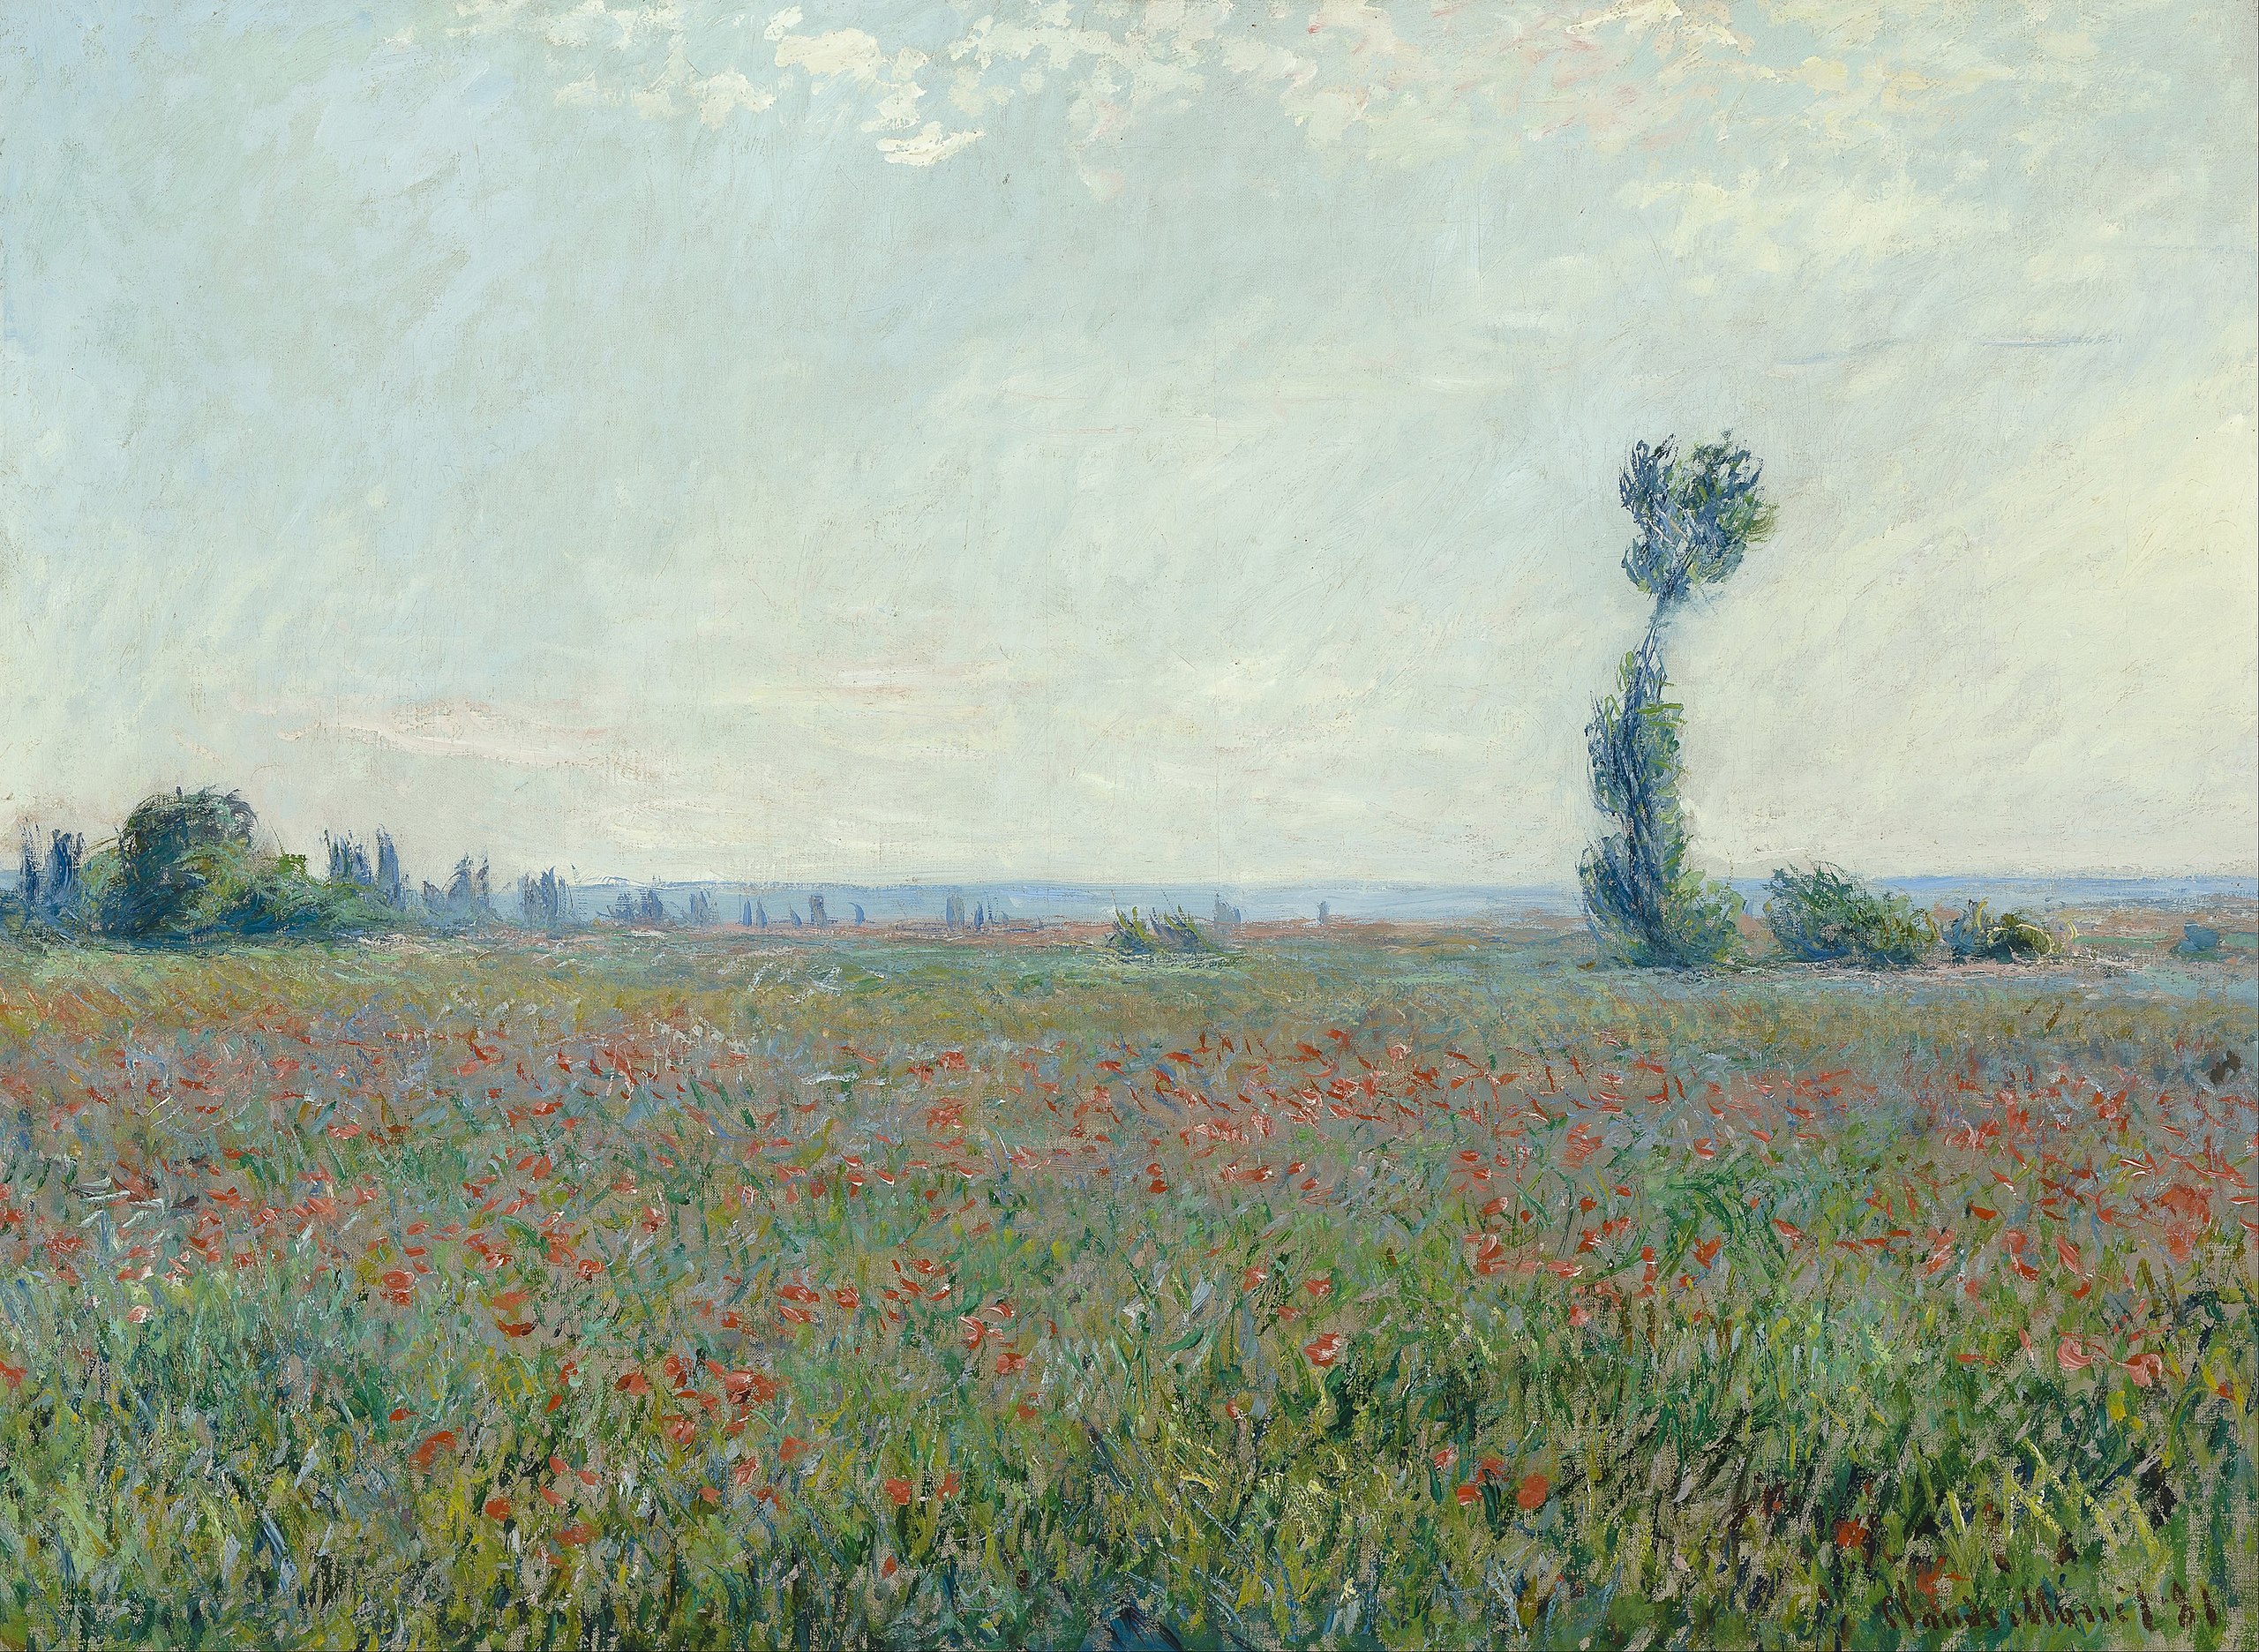 Champ de coquelicots by Claude Monet - 1881 - 79 x 58 cm Museum Boijmans Van Beuningen